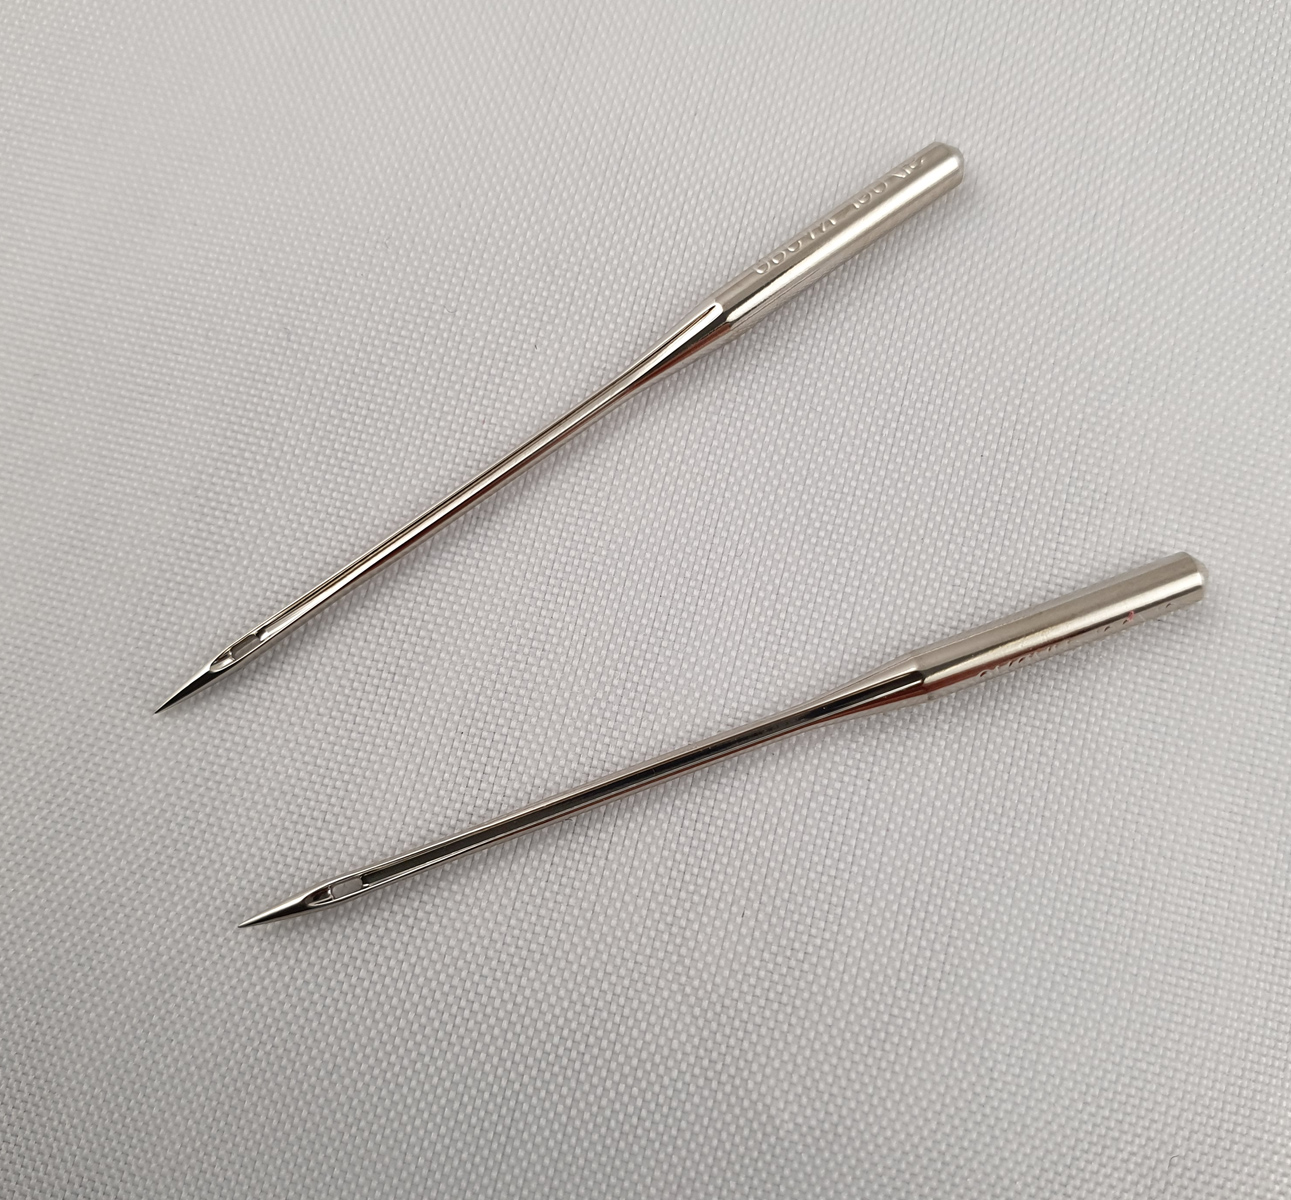 needles for sewing machine, round shank, 134-35, 2134-35 No 90 